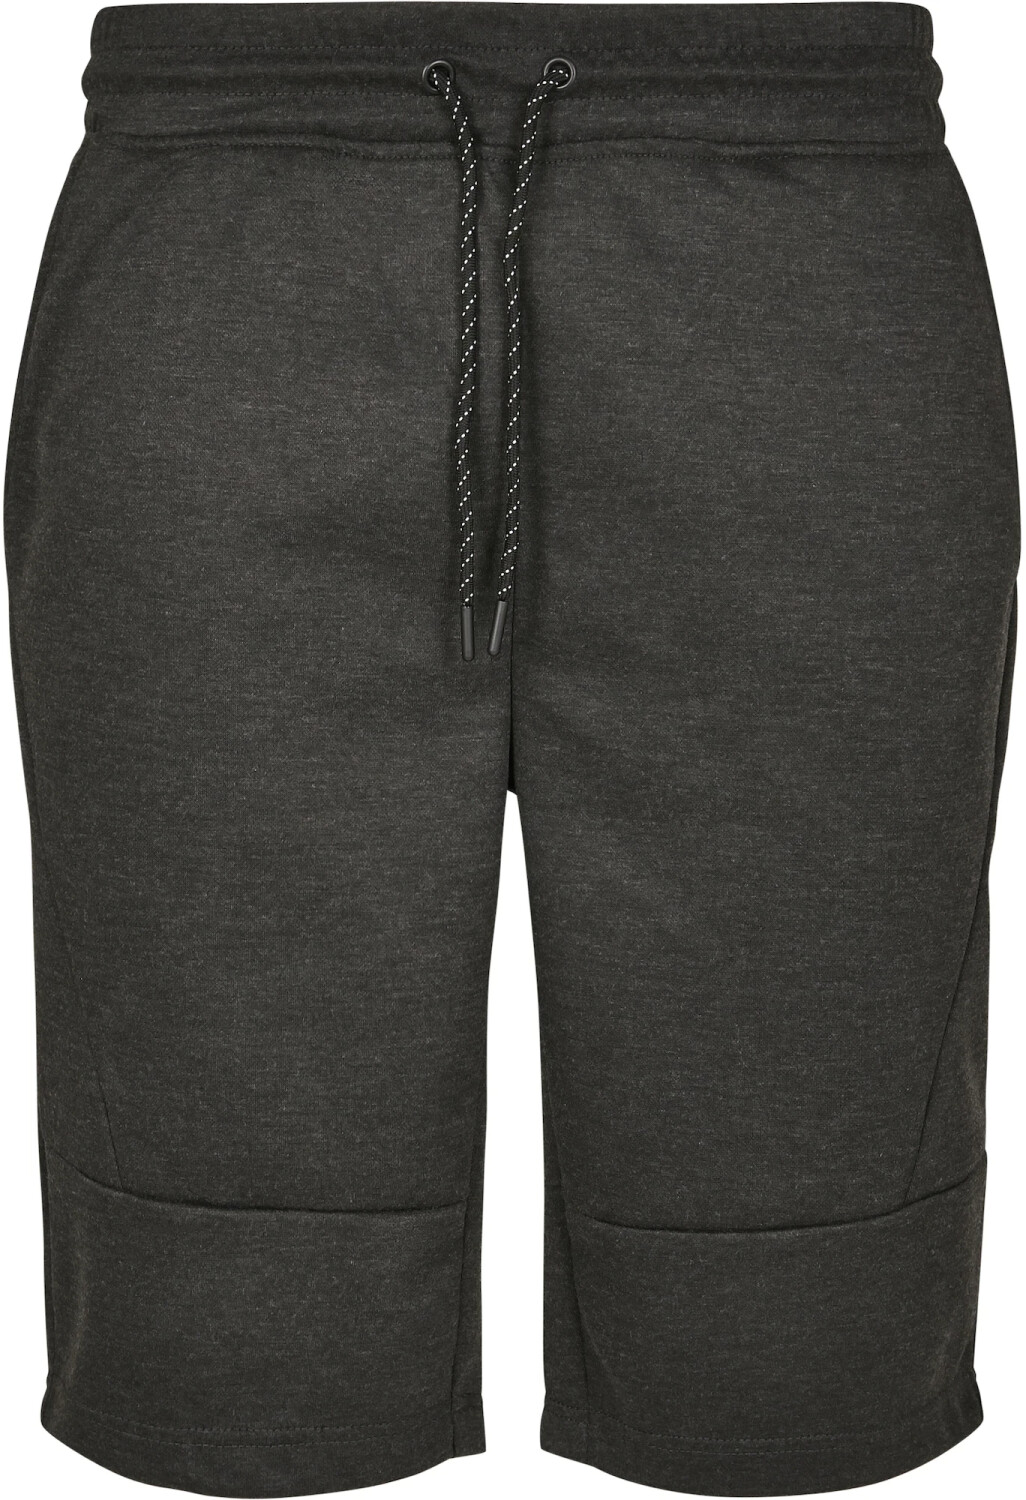 Southpole Shorts Tech Fleece Uni (SP158300635) grey